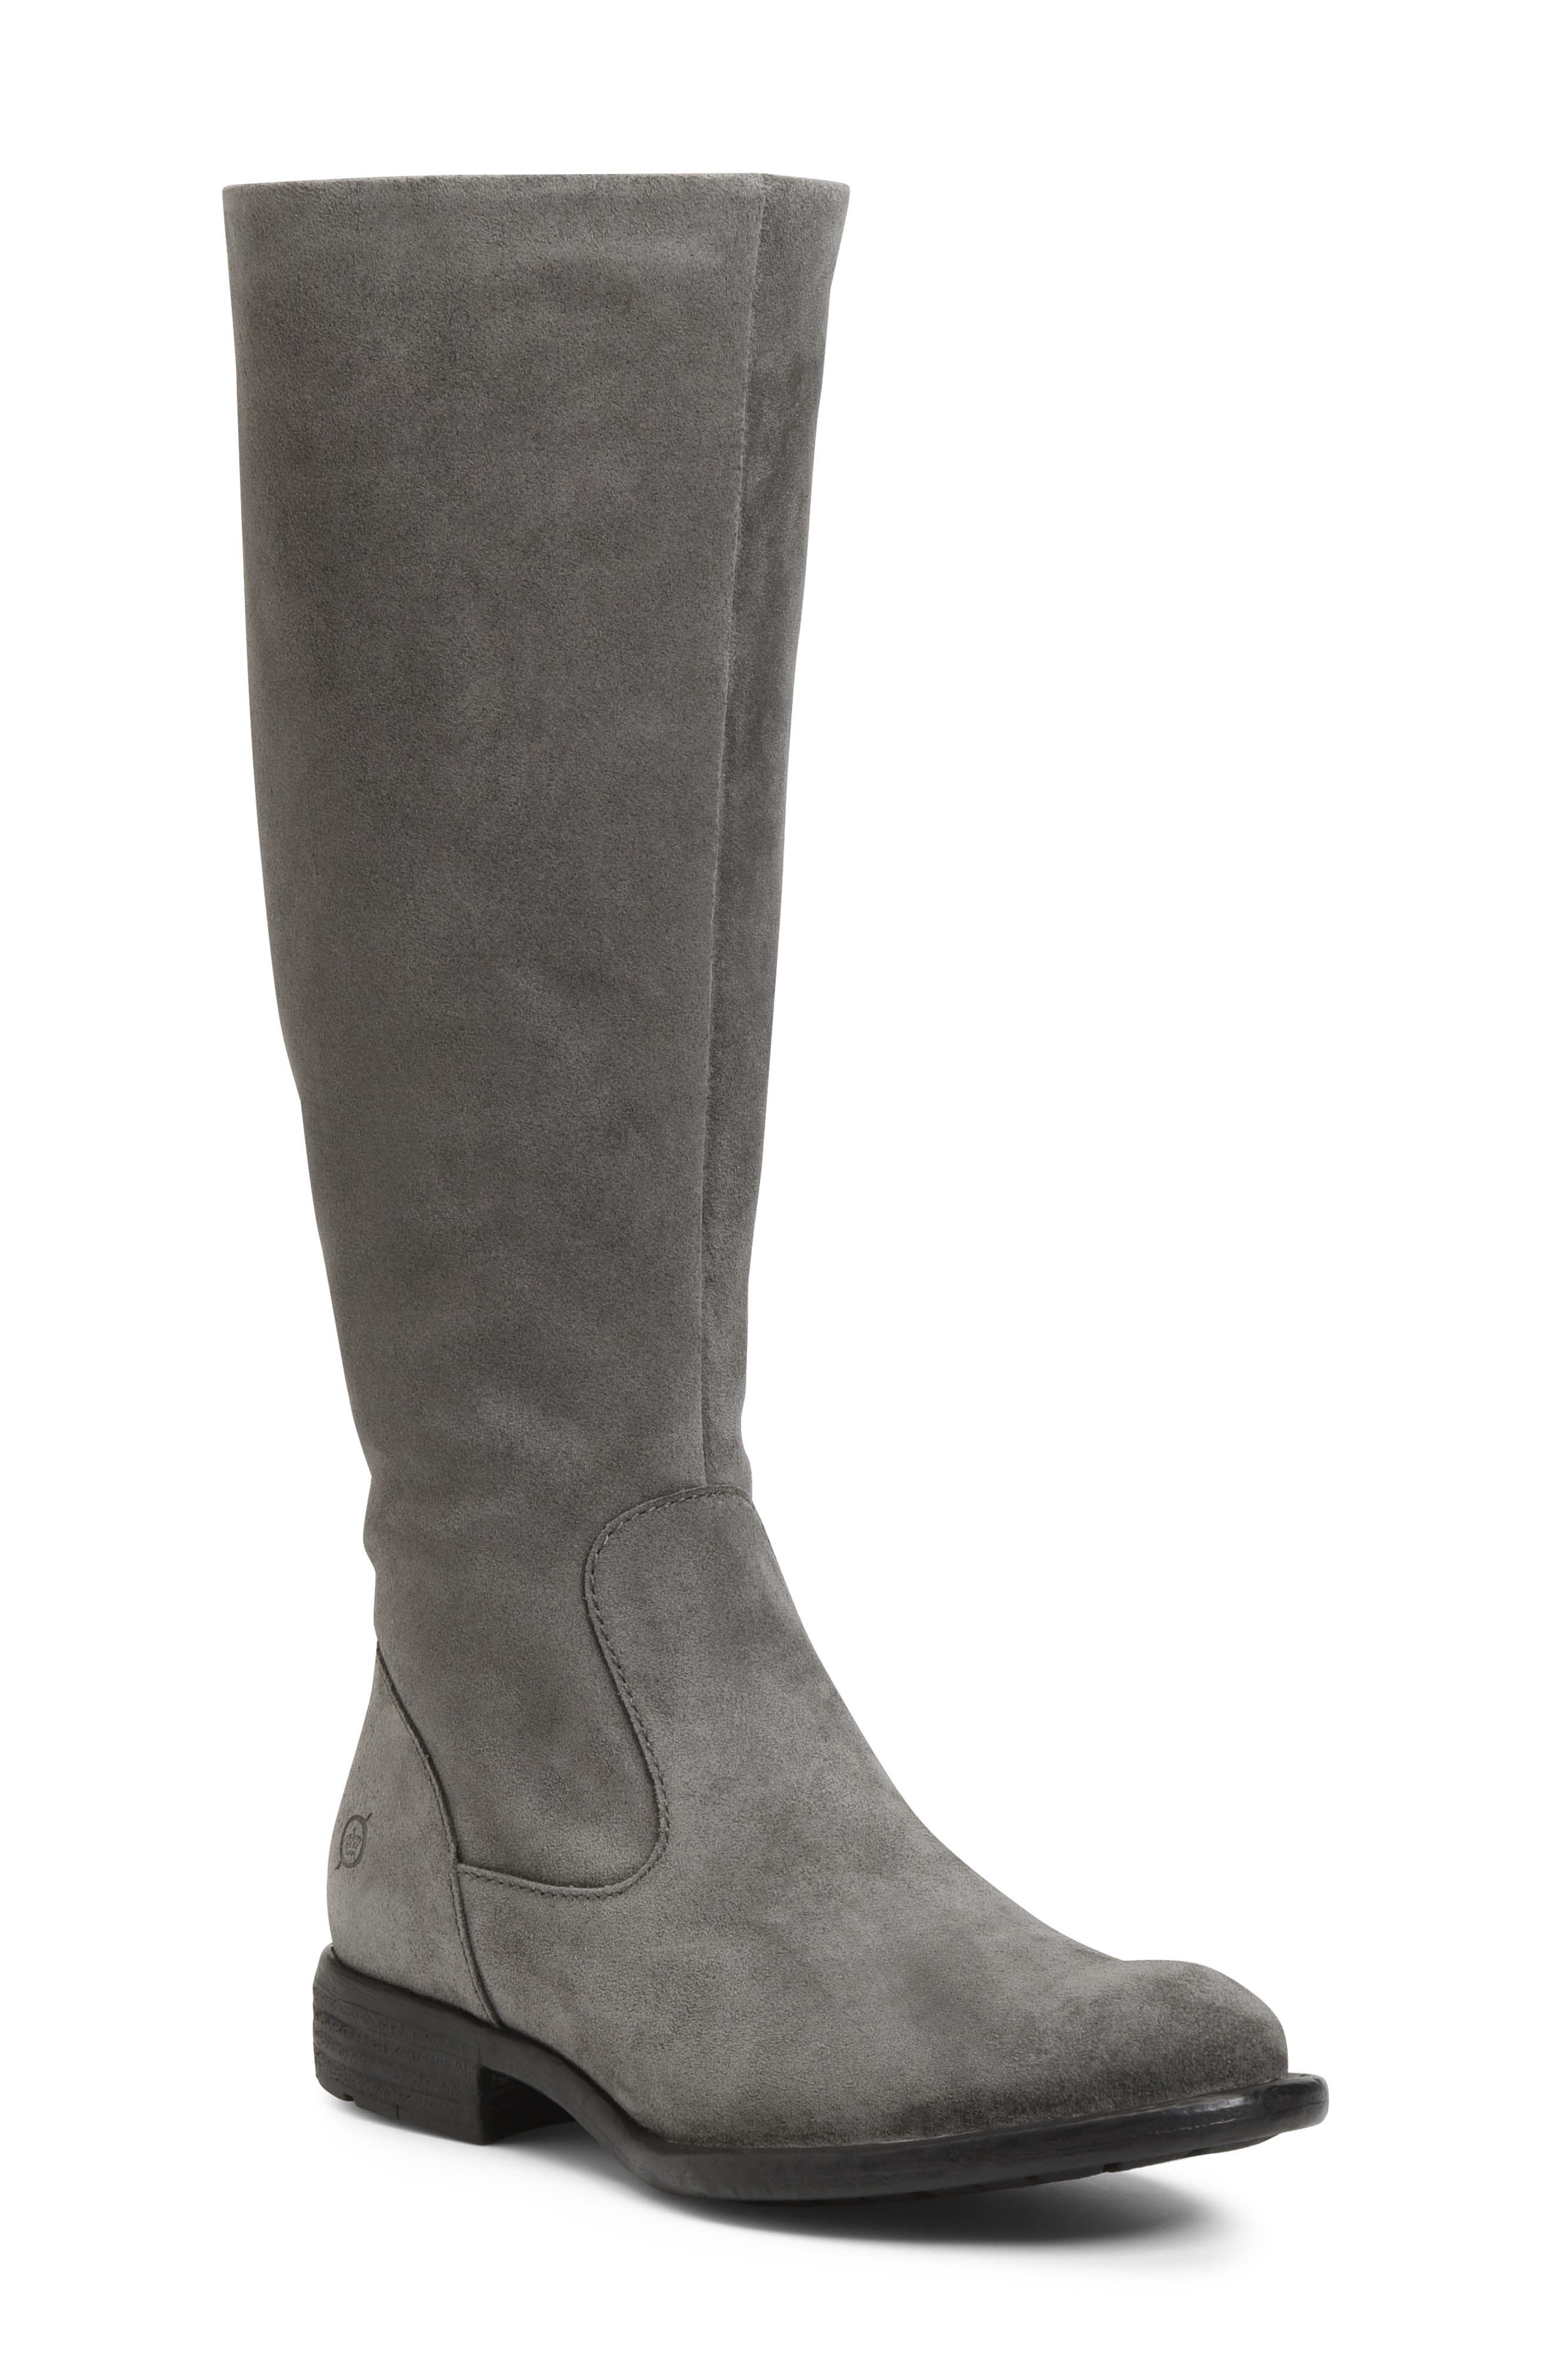 born grey suede boots